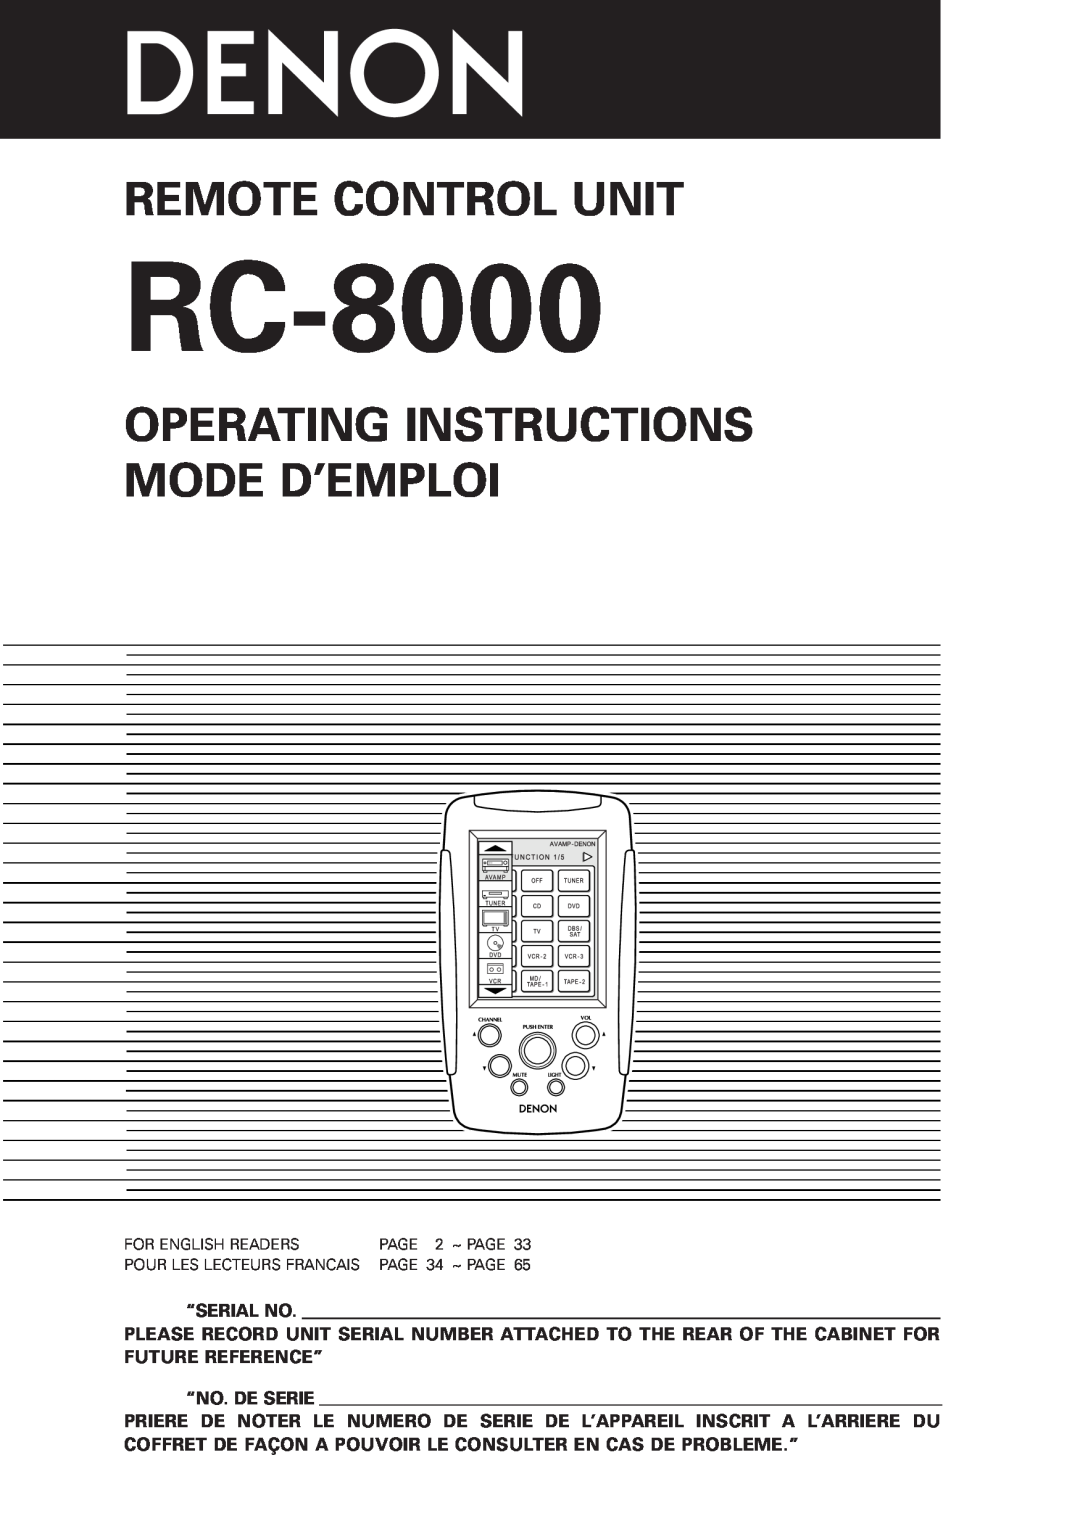 Denon RC-8000 manual Remote Control Unit, Operating Instructions Mode D’Emploi, “Serial No, “No. De Serie 